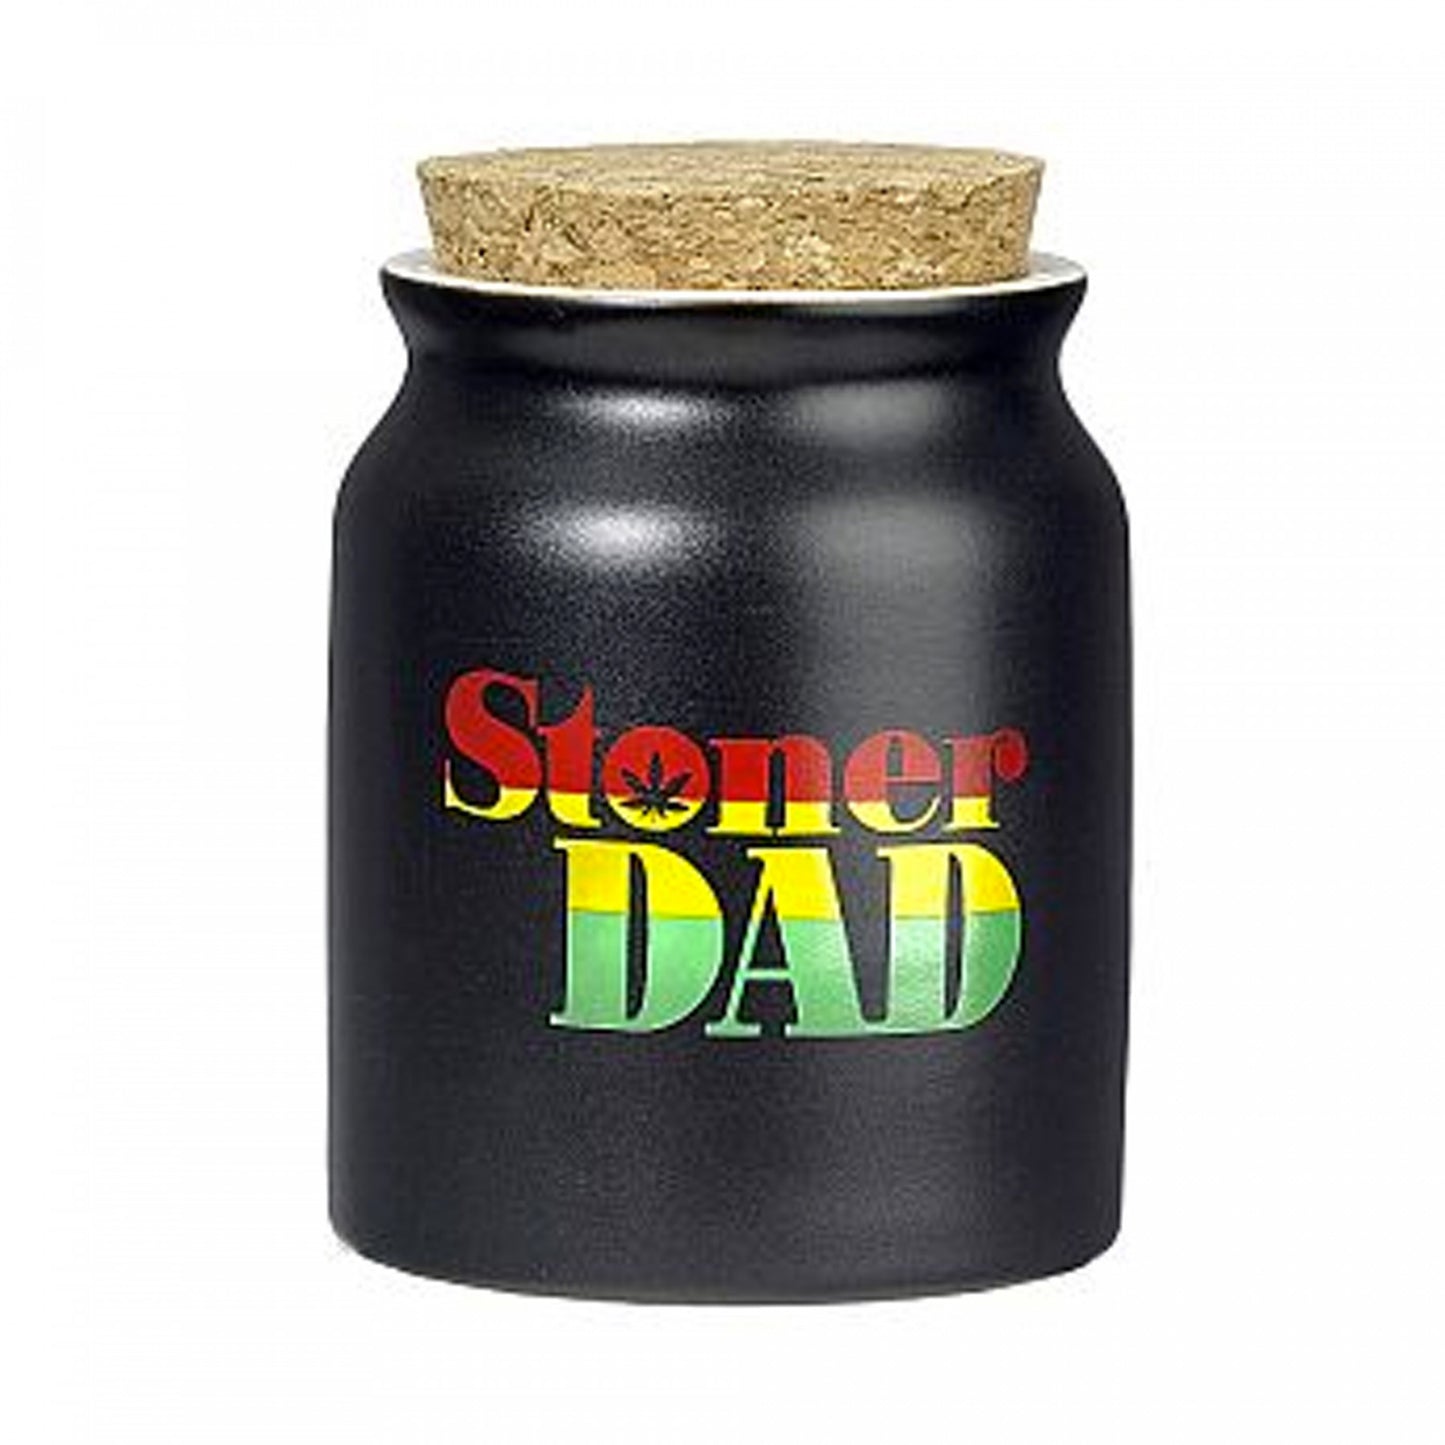 Black Ceramic Jar with Cork Lid and Rasta Stoner Dad Label